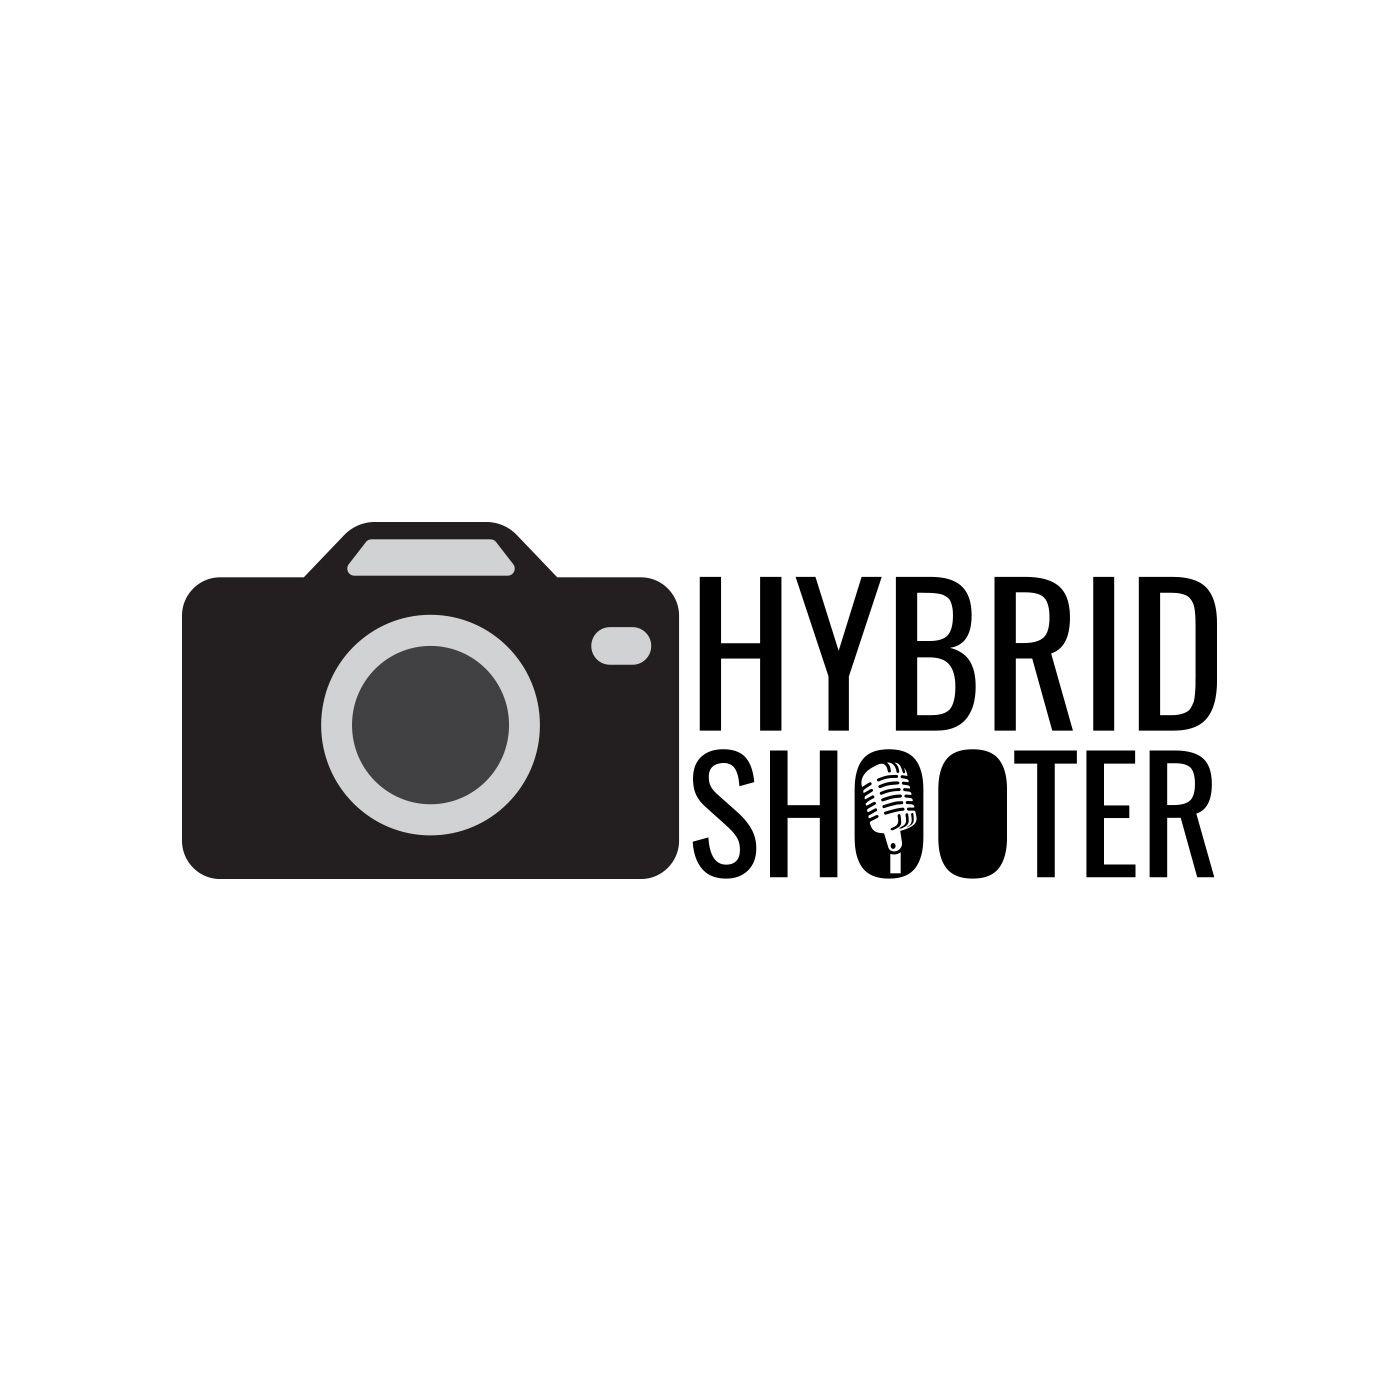 Hybrid Shooter Podcast